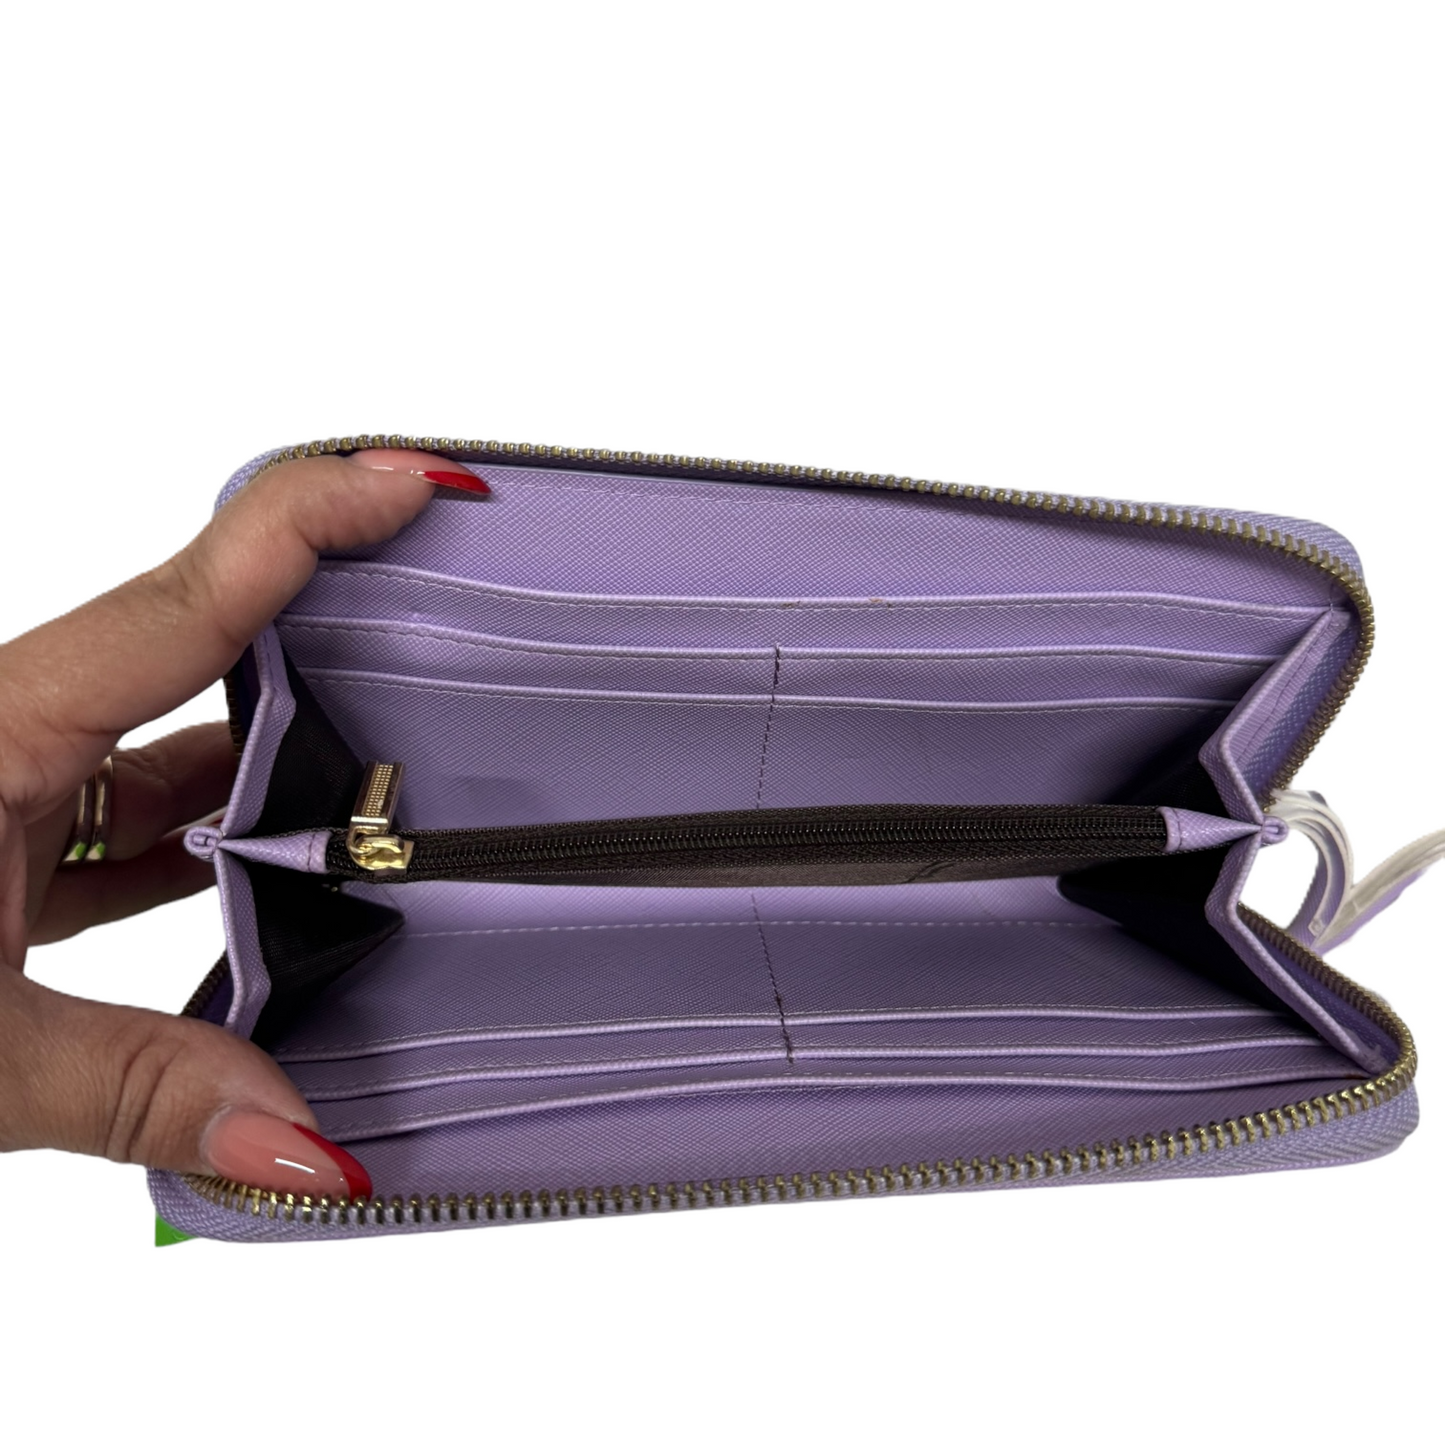 Wallet By travelambo  Size: Medium